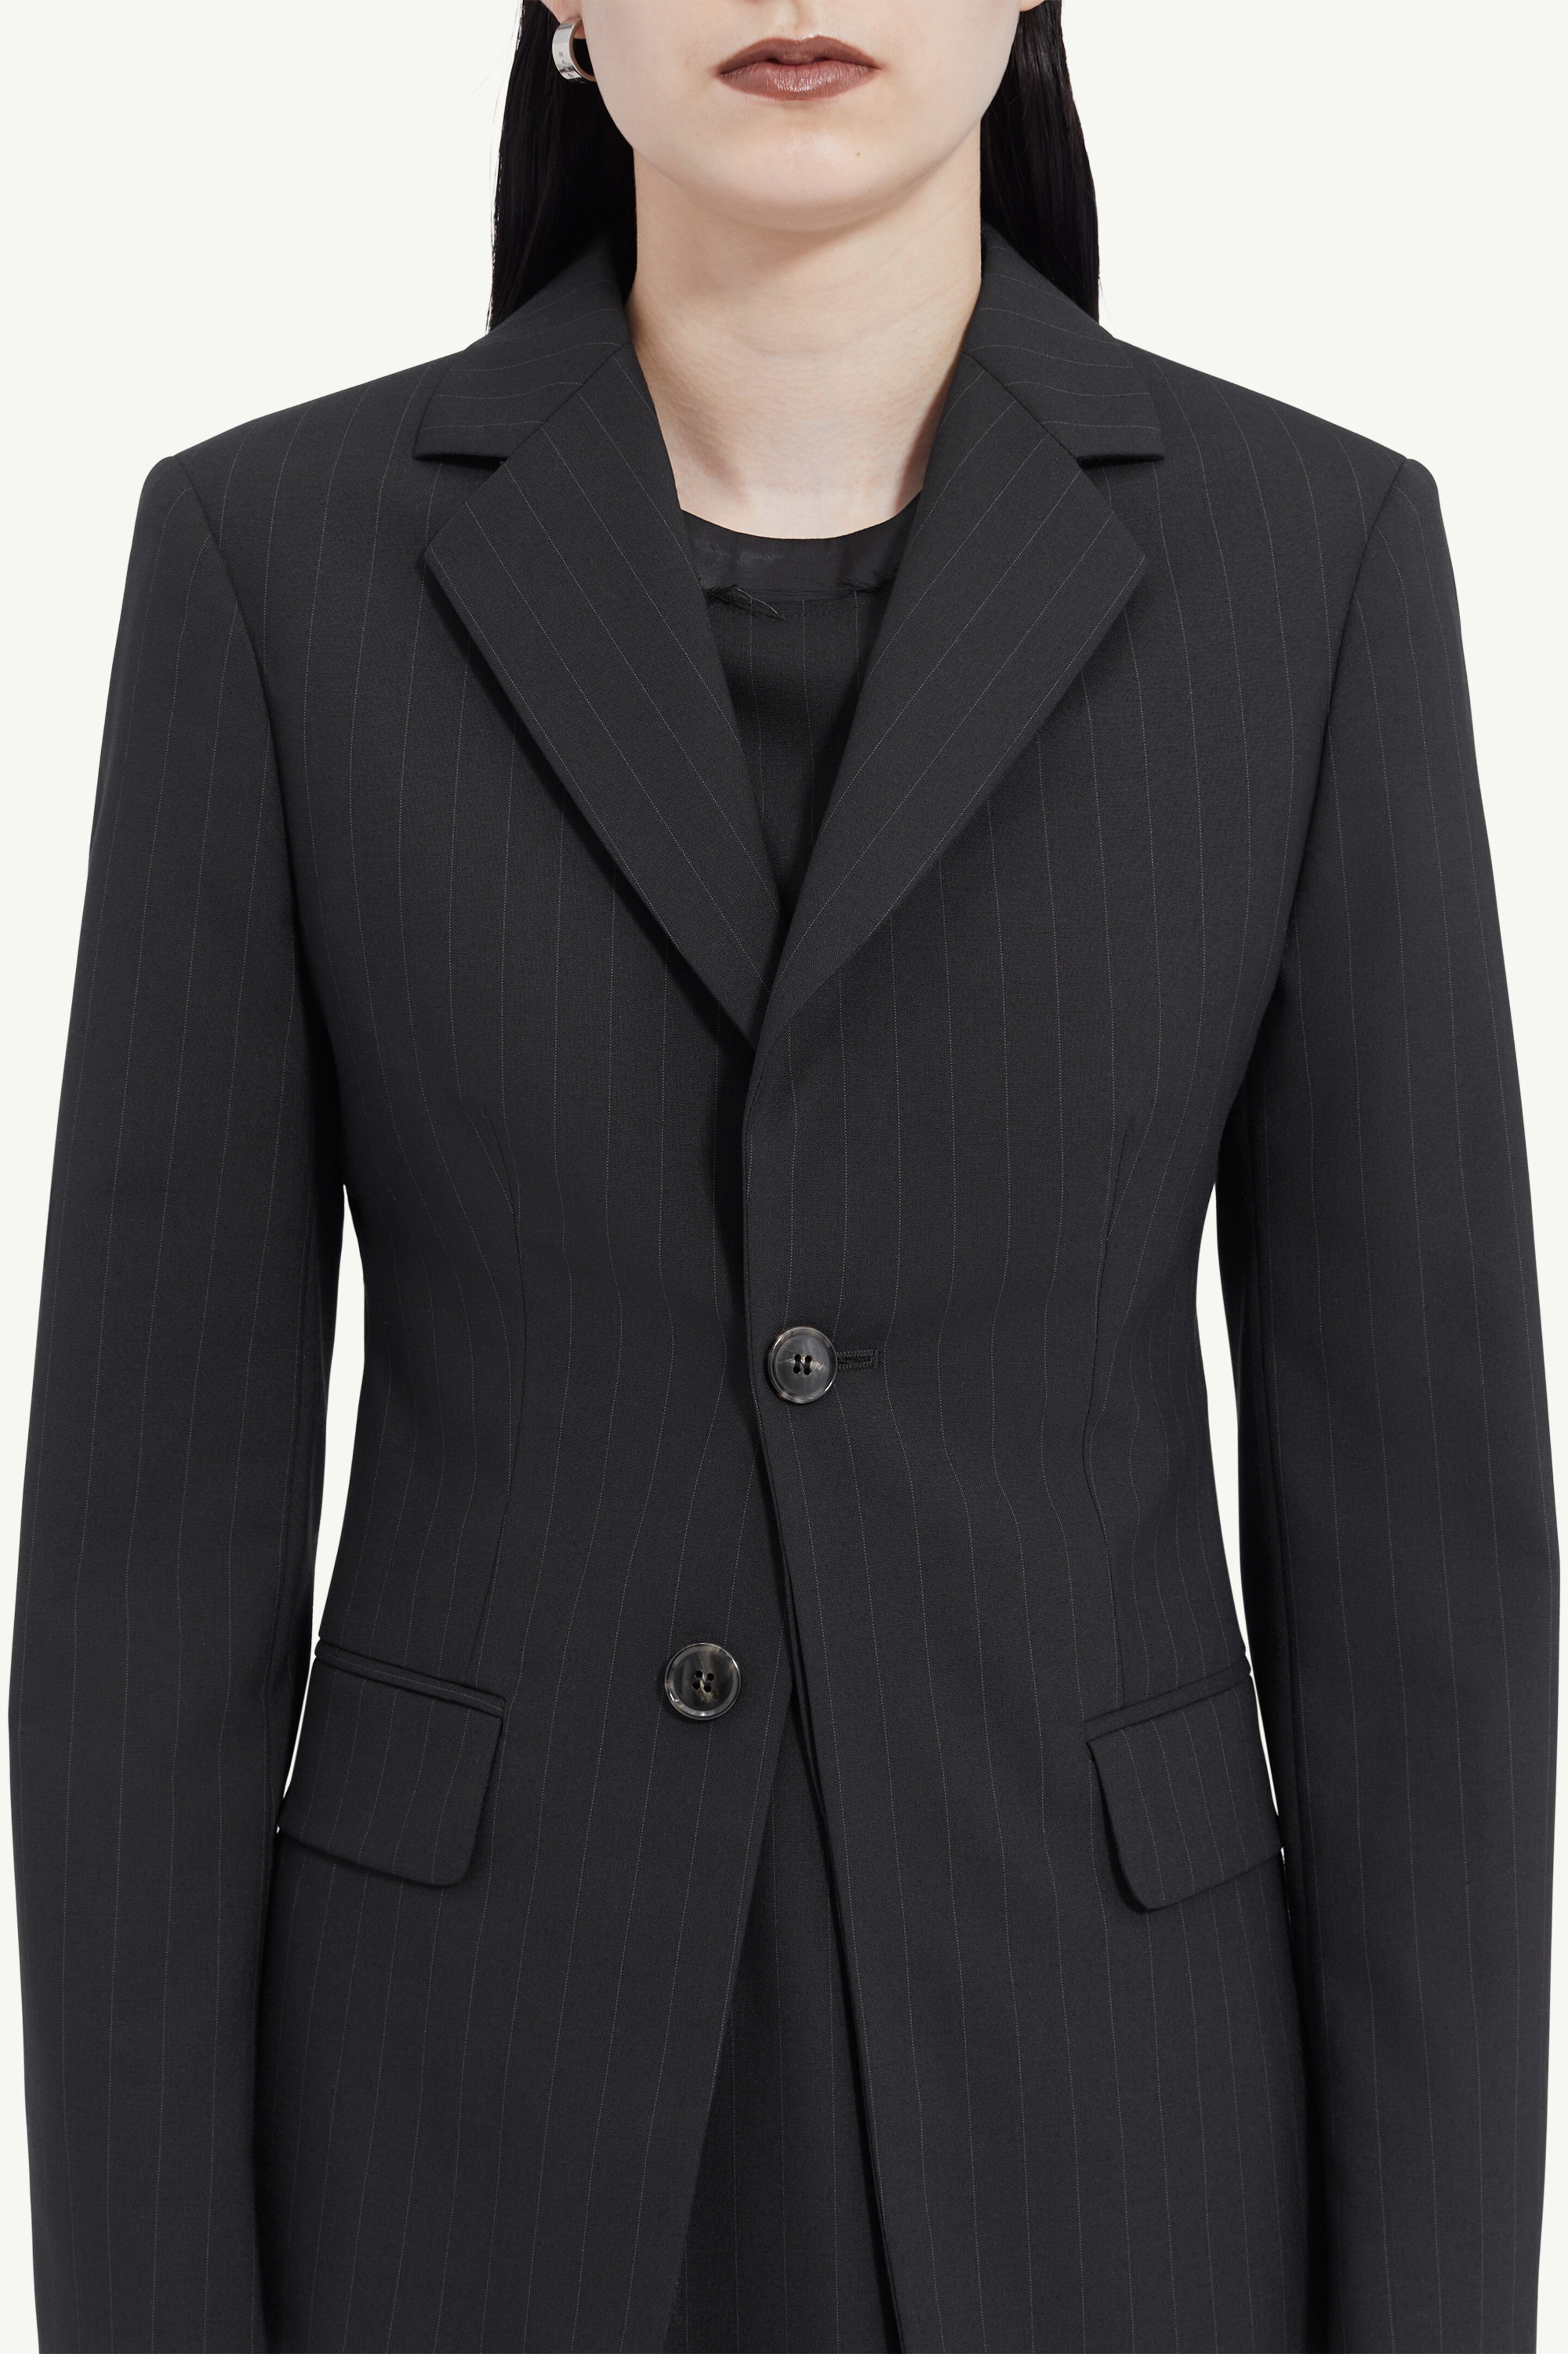 Pinstripe suit jacket - 5